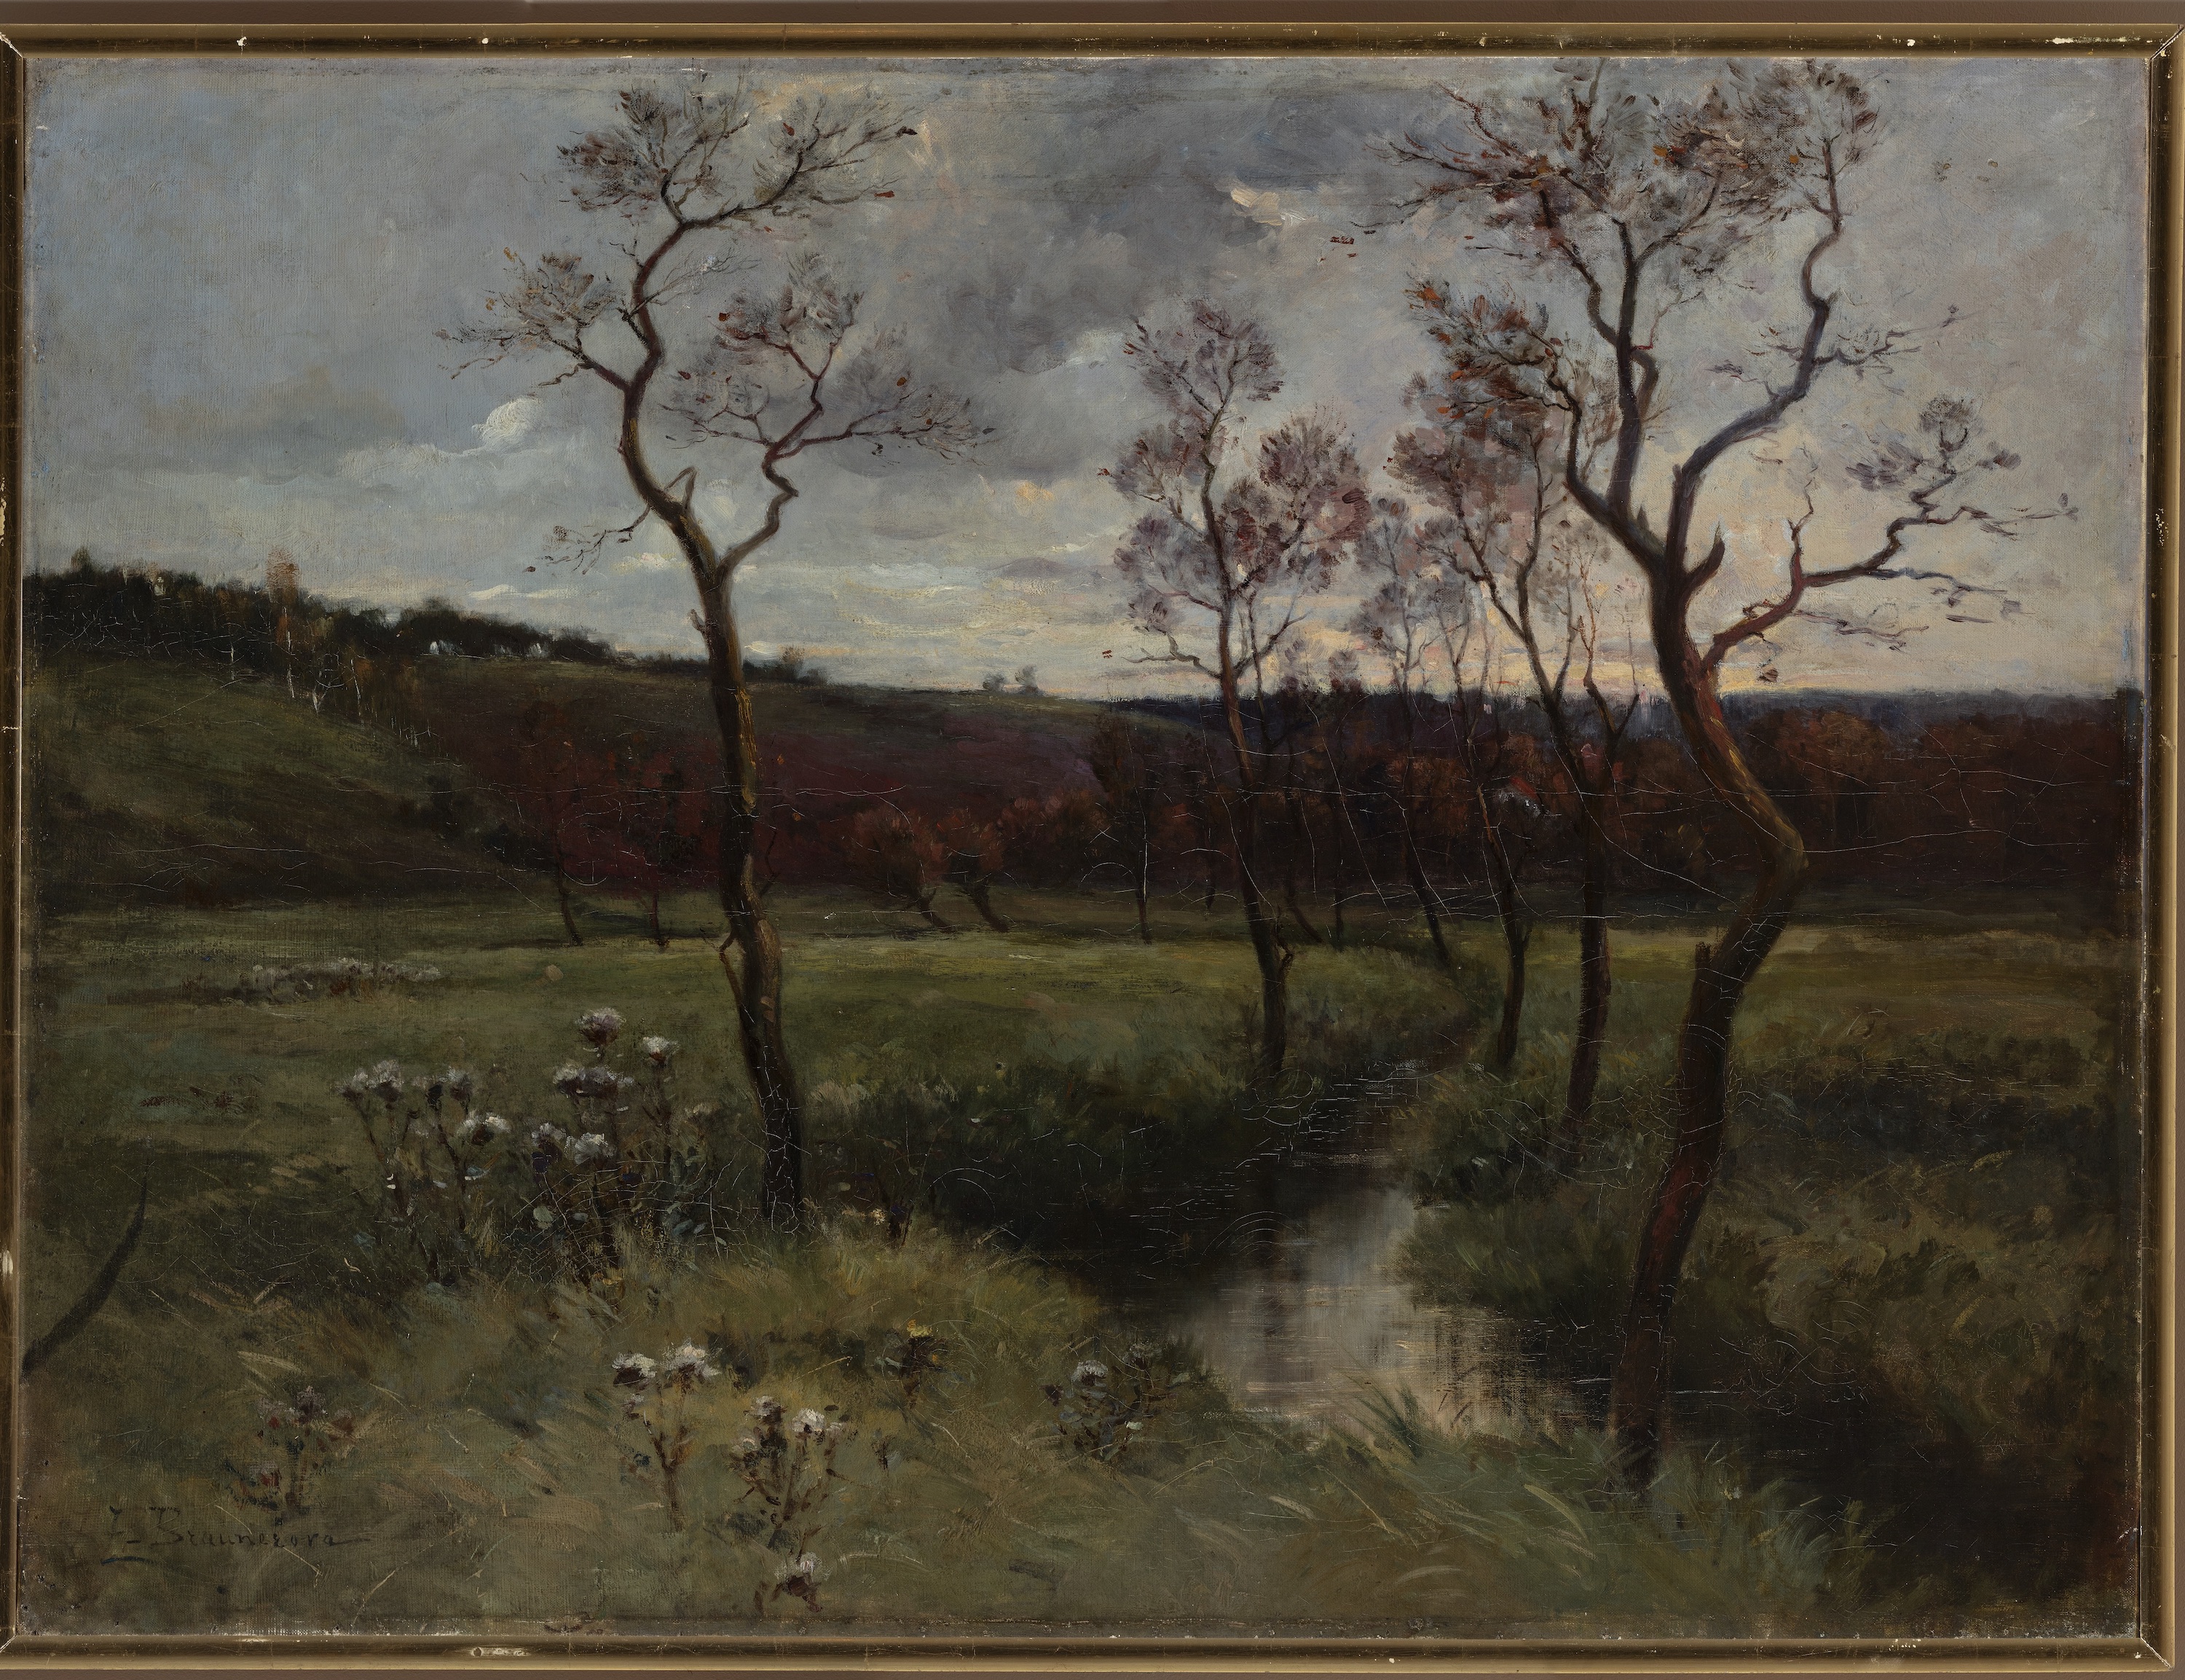 A Quiet Valley at Roztoky by Zdenka Braunerová - c. 1886 - 83 x 110 cm National Gallery in Prague